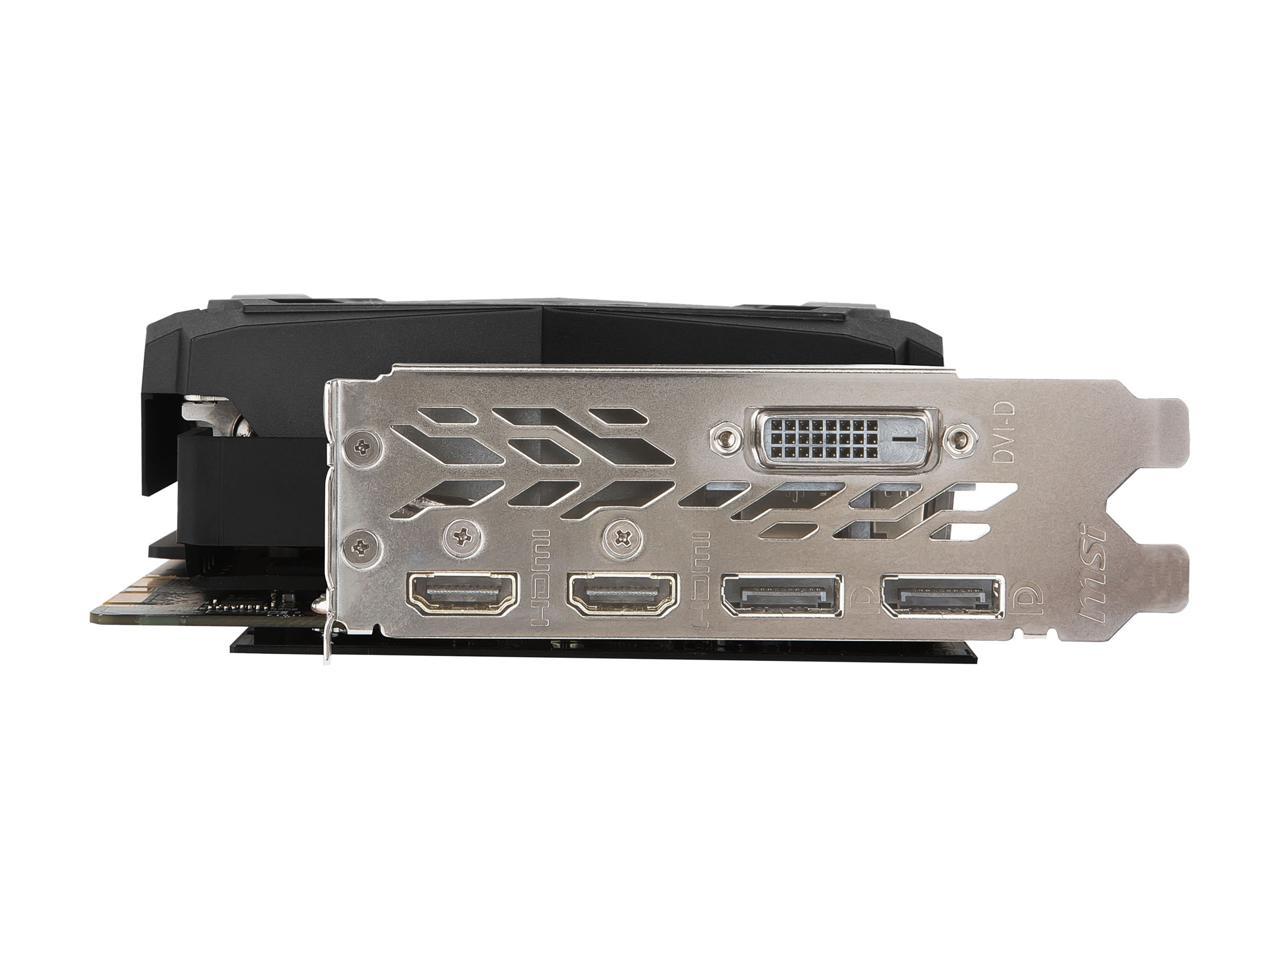 MSI GeForce GTX 1080 Ti 11GB GDDR5X PCI Express 3.0 x16 SLI Support ATX  Video Card GTX 1080 Ti GAMING X TRIO